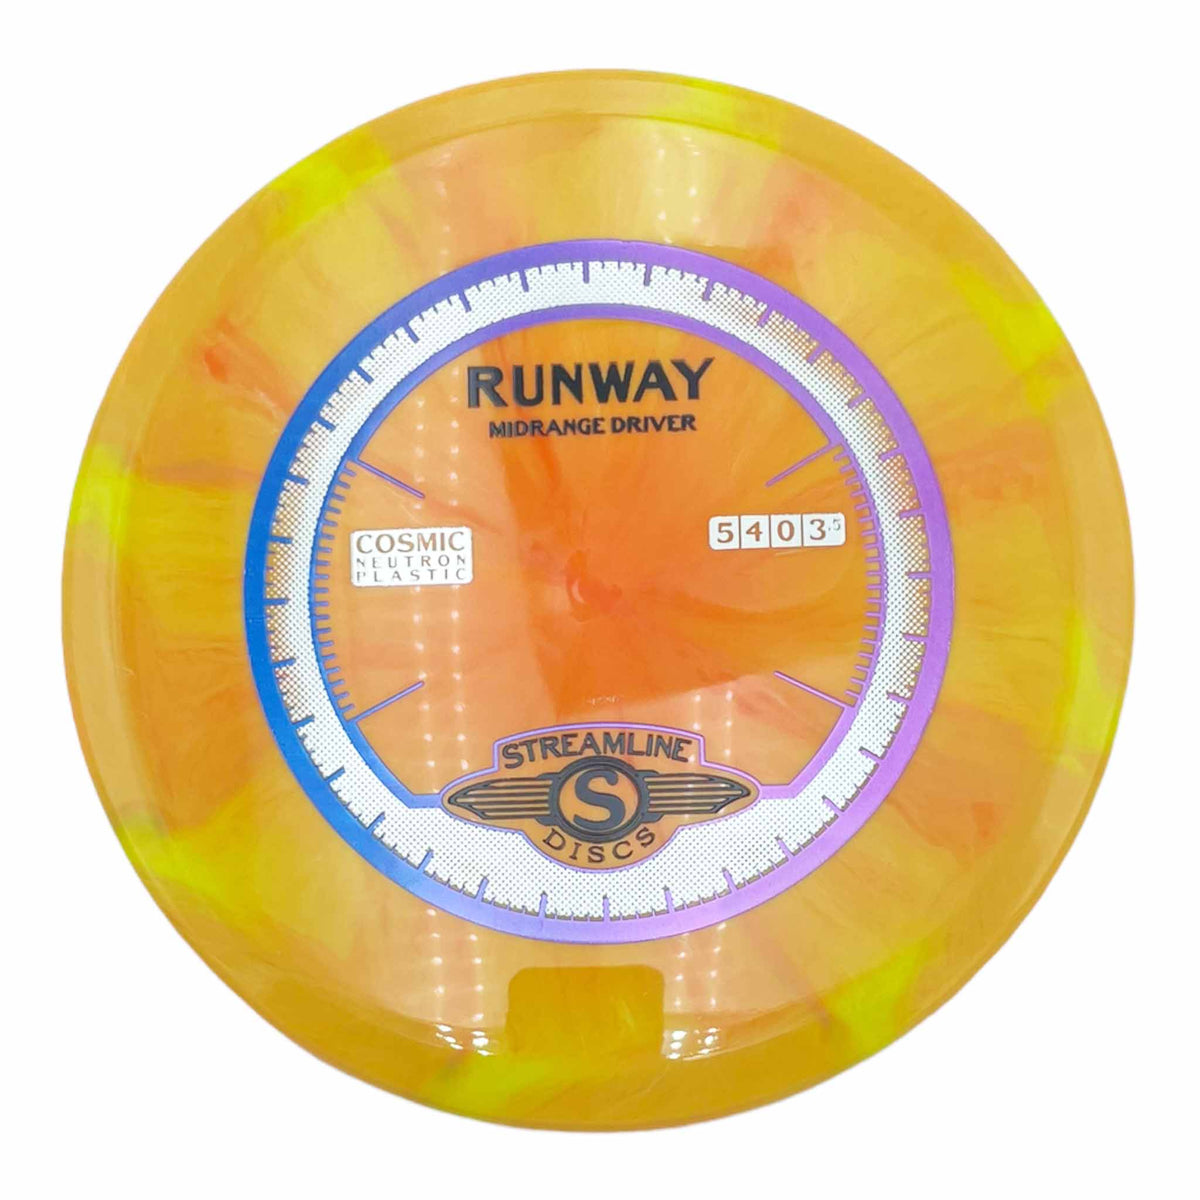 Streamline Discs Cosmic Neutron Runway midrange - Orange